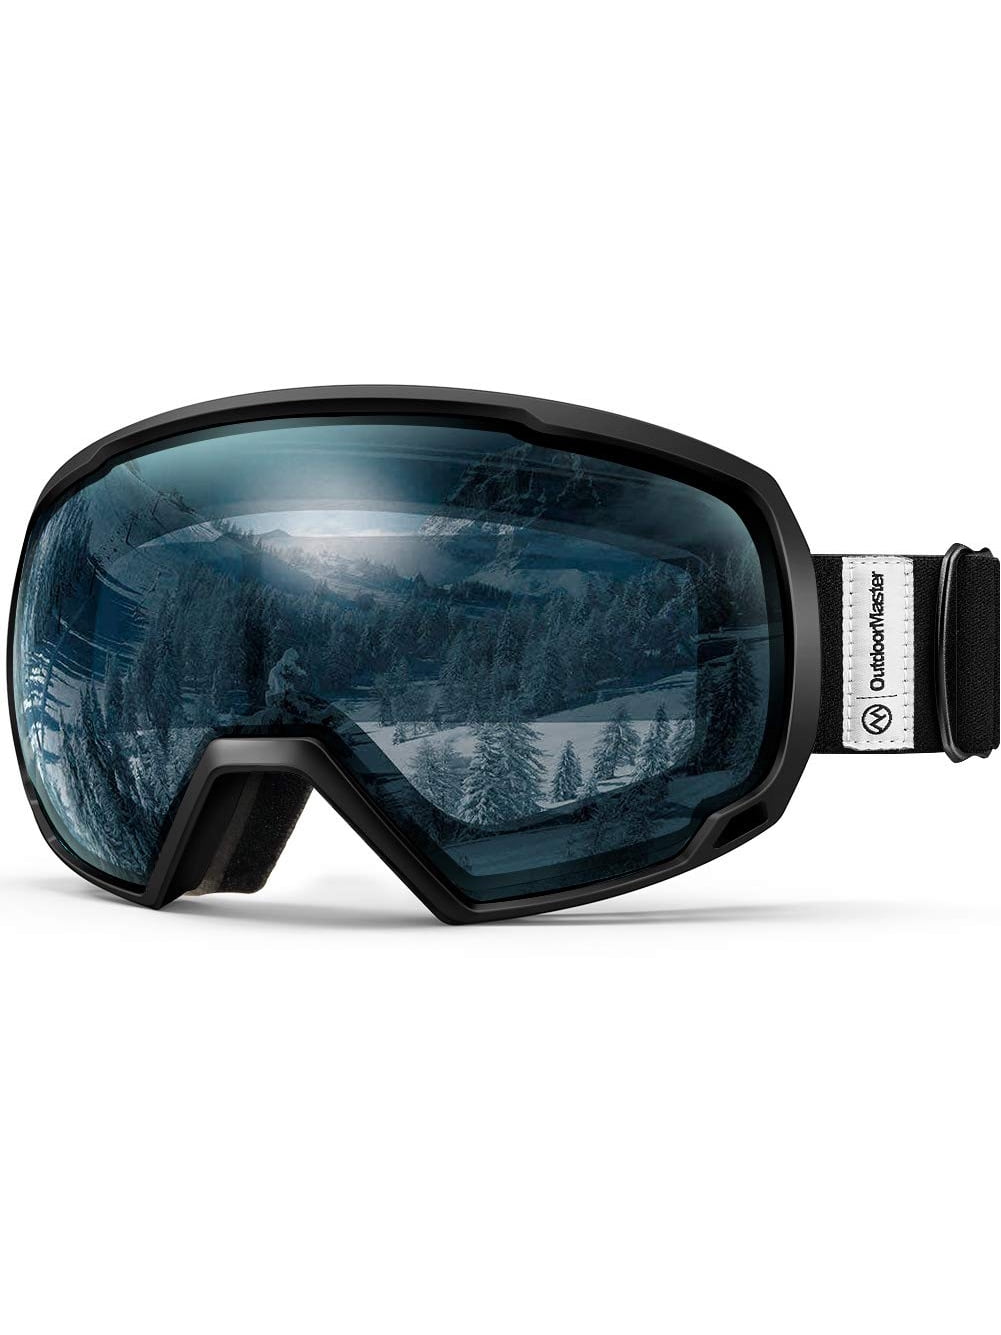 OutdoorMaster OTG Ski Goggles Over Glasses Ski/Snowboard Goggles for Men, 